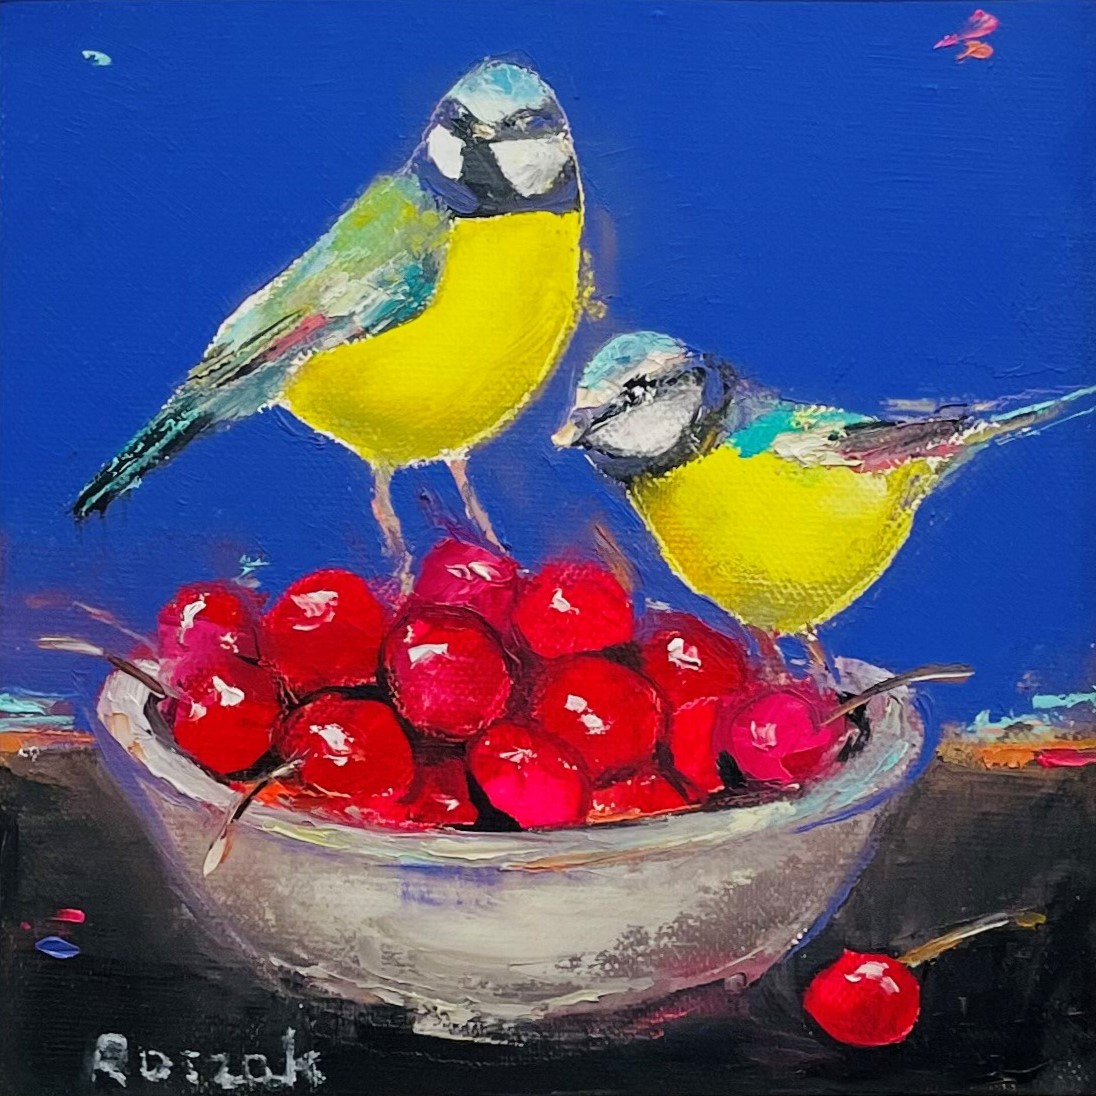 'Cherries' by artist Basia Roszak